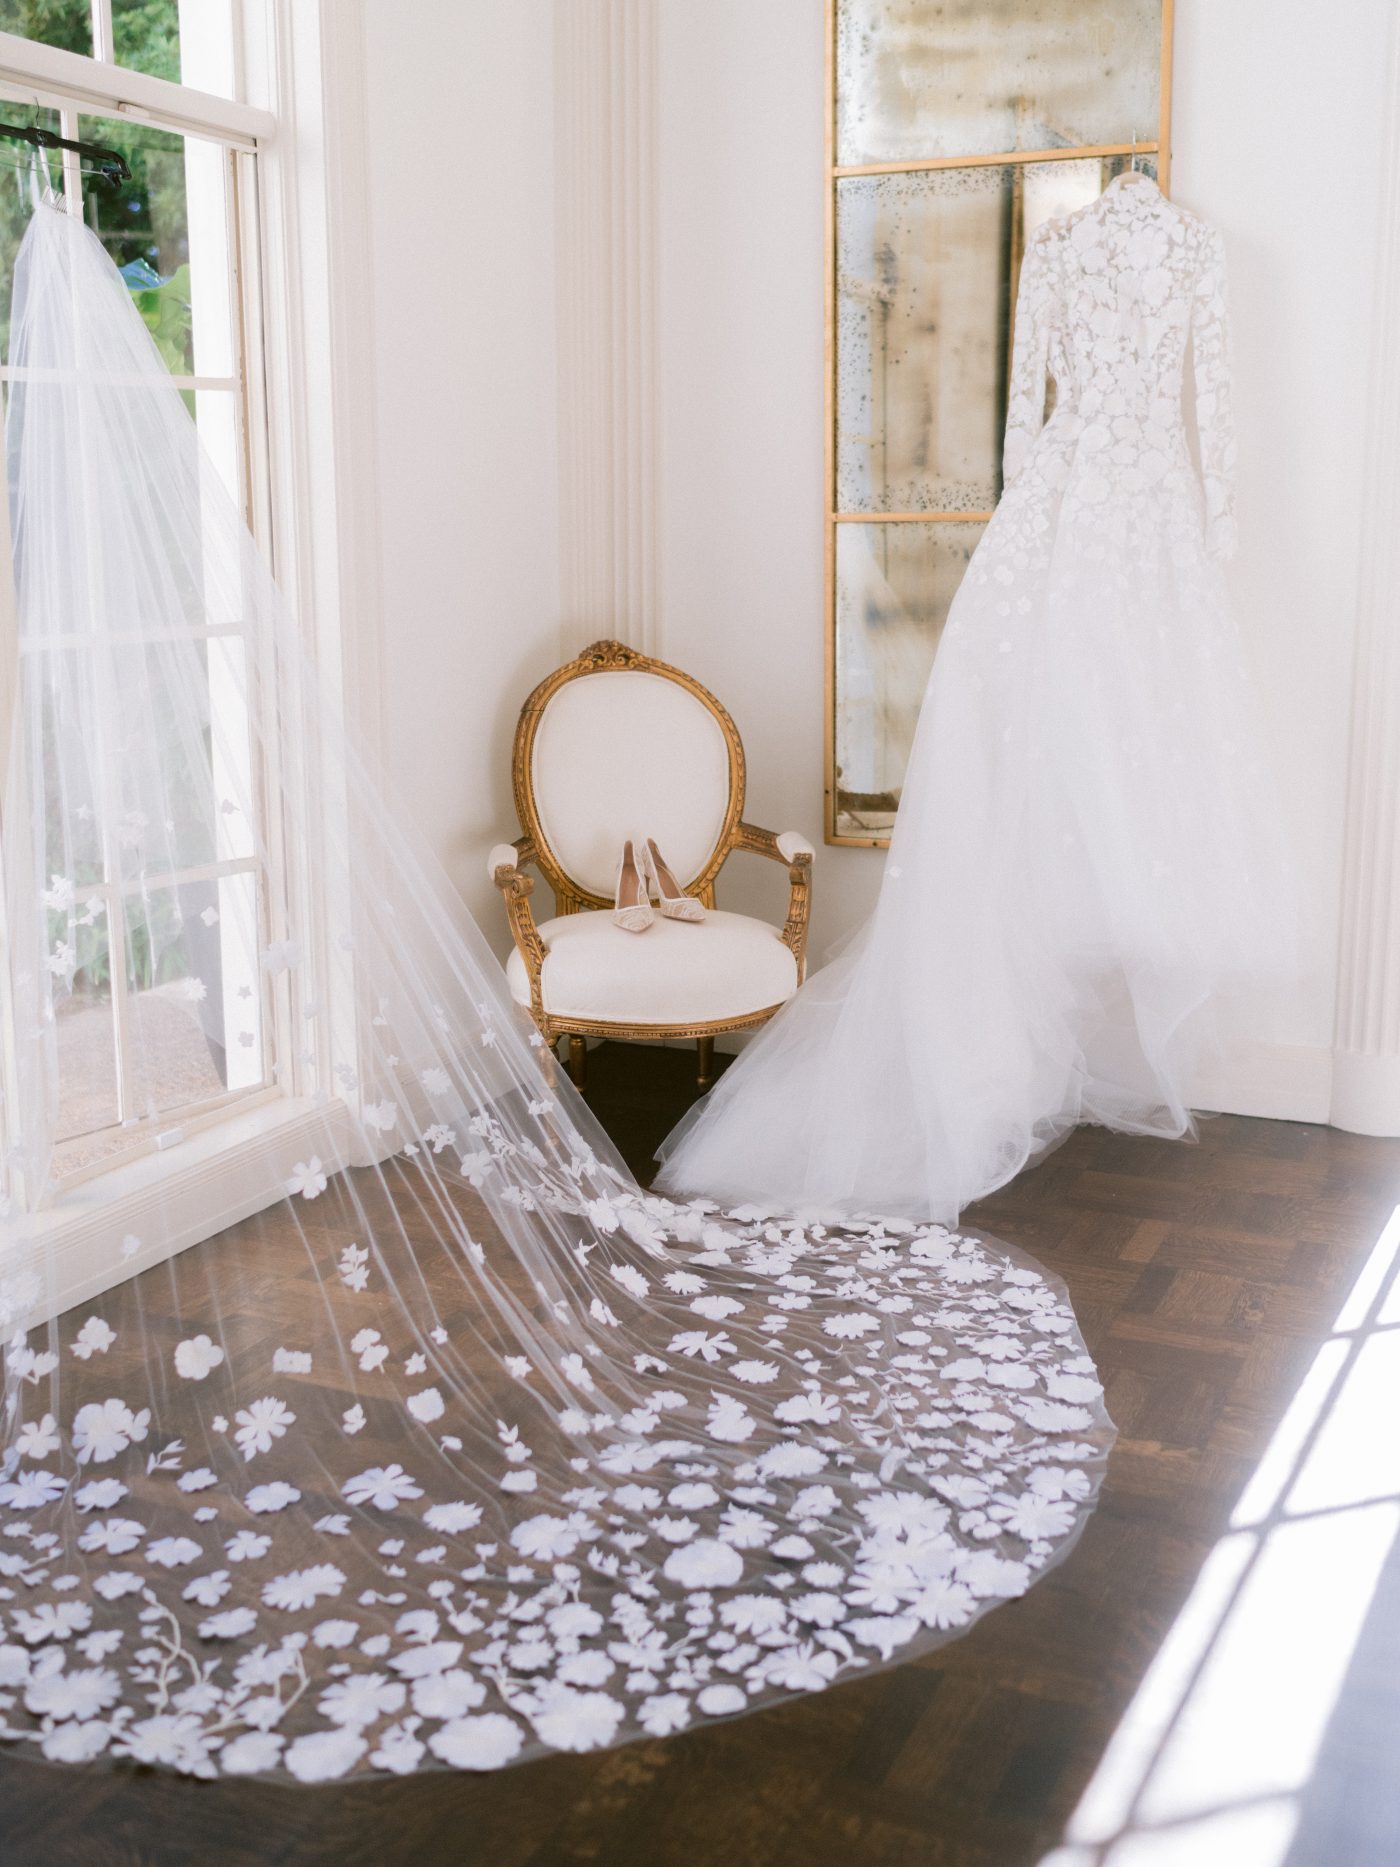 Every Magical Detail of Paris’ Fairytale Wedding